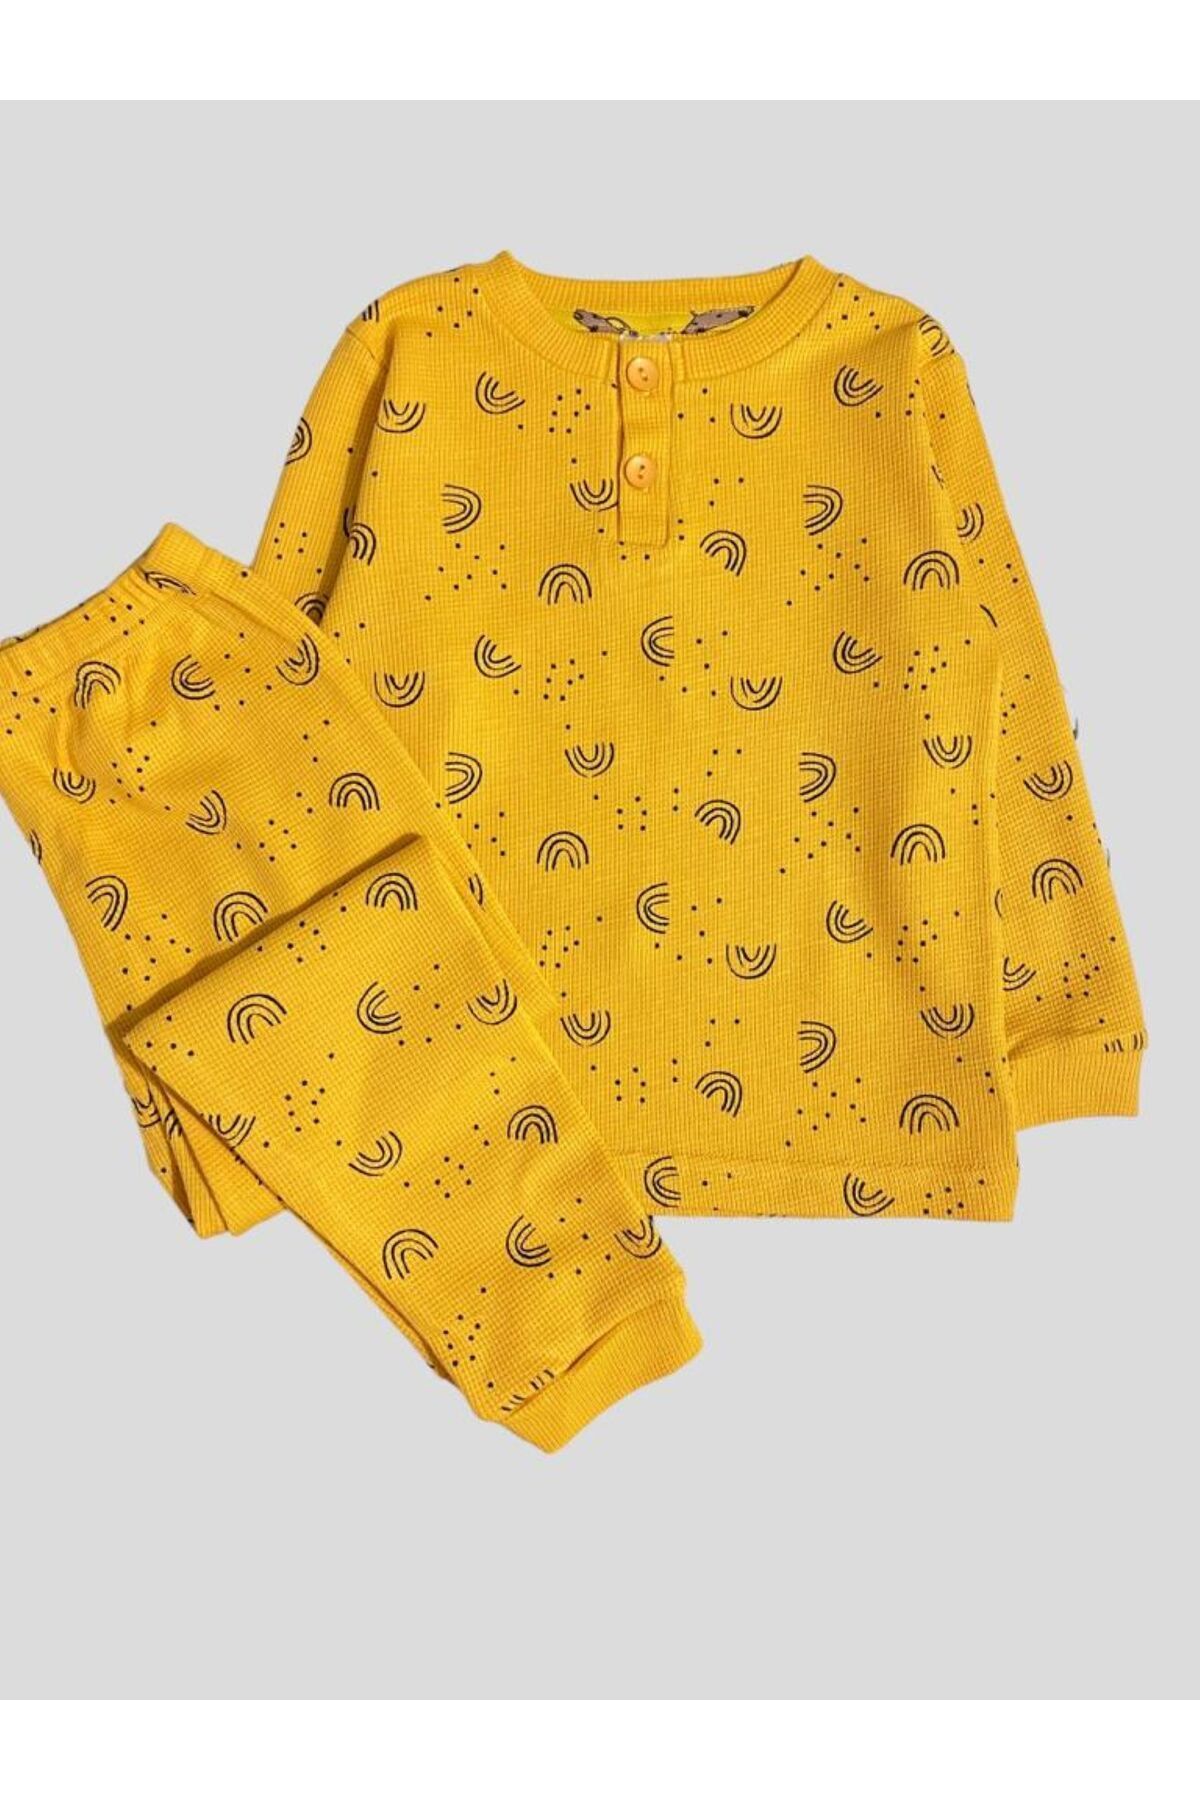 elmas kids Kız Çocuk %100 Pamuklu Waffle Kumaş Yüksek Kaliteli Pijama Takımı